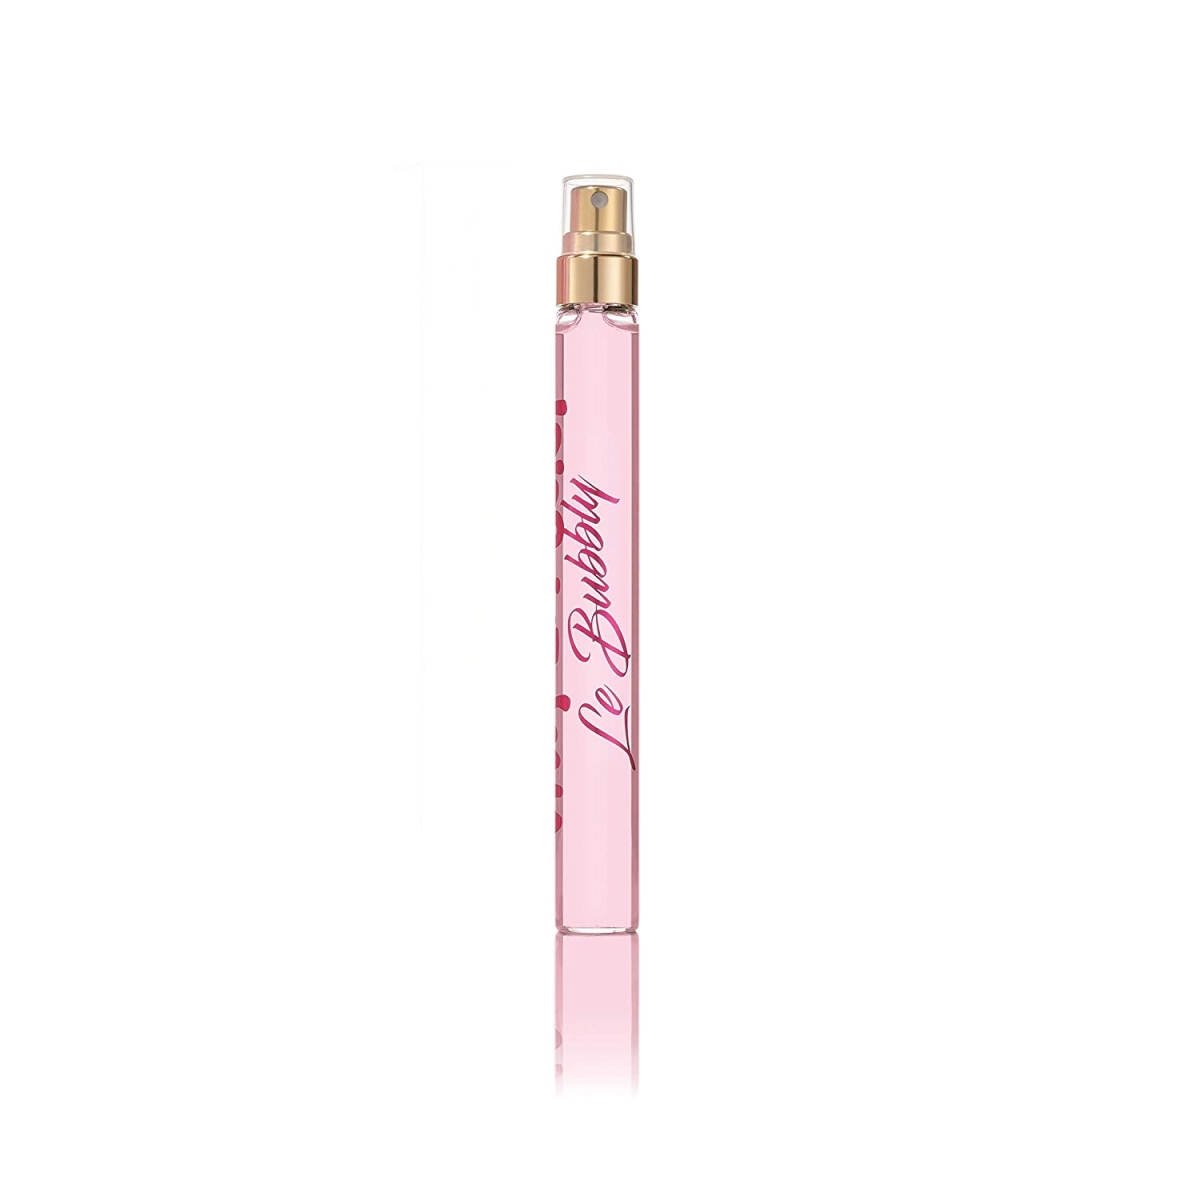 393207 Viva La Juicy Le Bubbly Eau De Parfum Spray for Women - 3.4 oz -  Juicy Couture